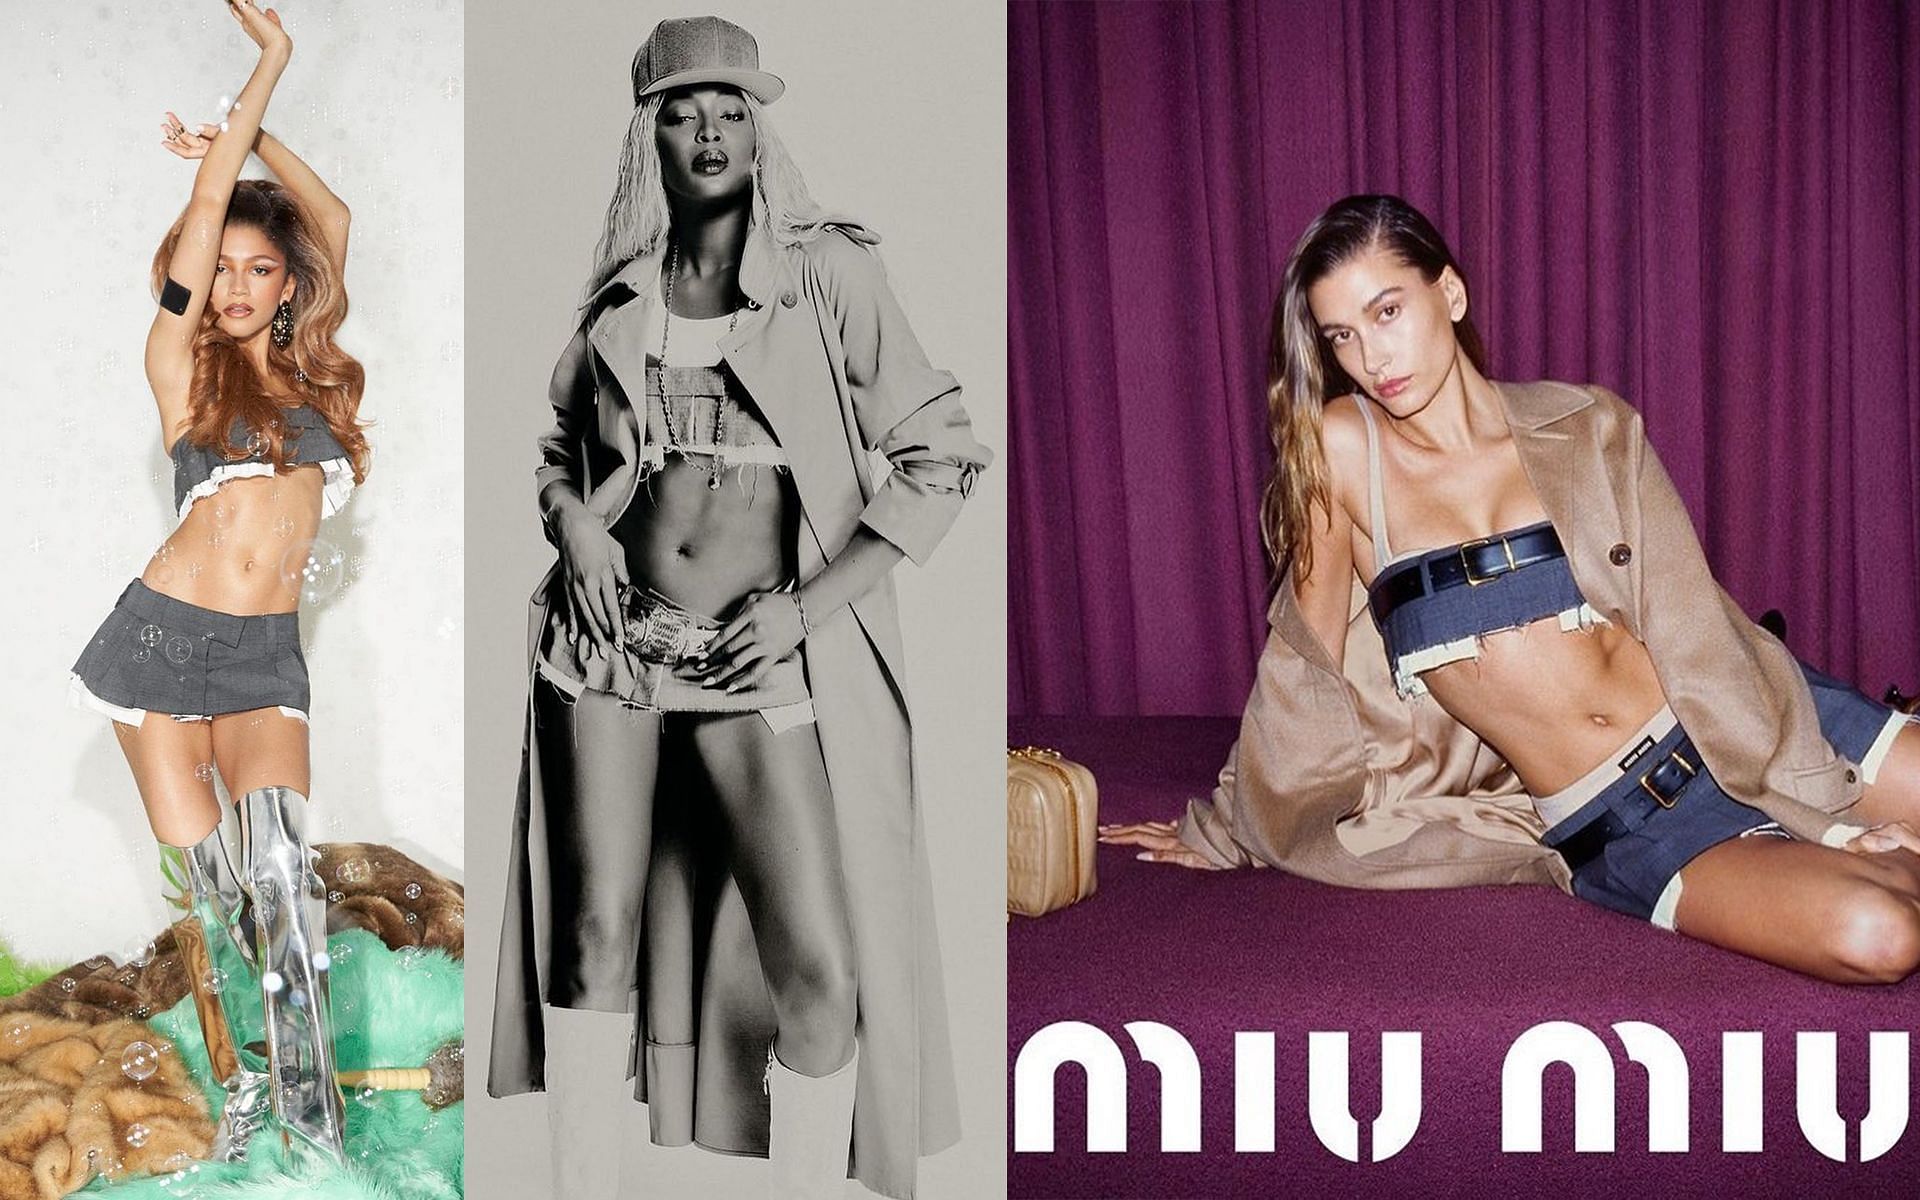 Miu Miu set was released by Muiccia Prada as part of Spring/Summer 2022 collection (Image via Instagram/miumiuset)